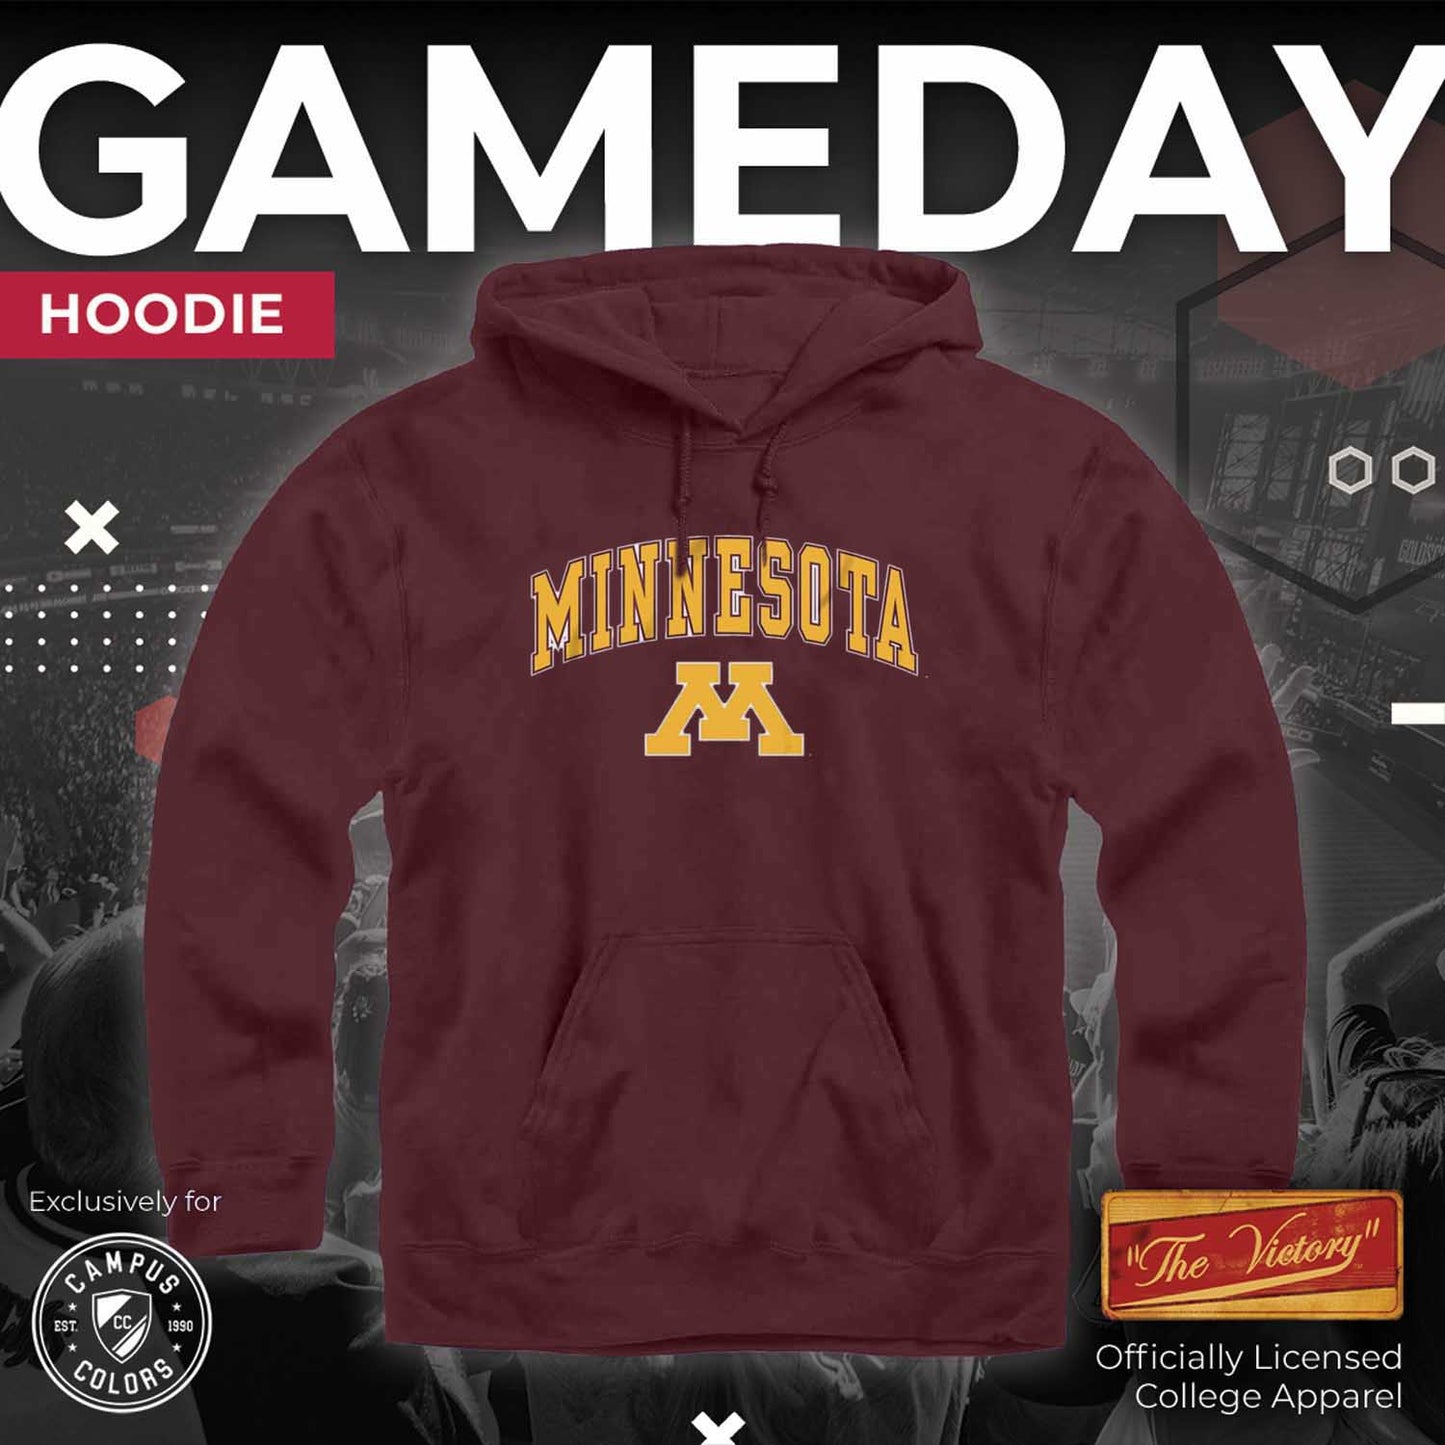 Minnesota Golden Gophers Adult Arch & Logo Soft Style Gameday Hooded Sweatshirt - Maroon